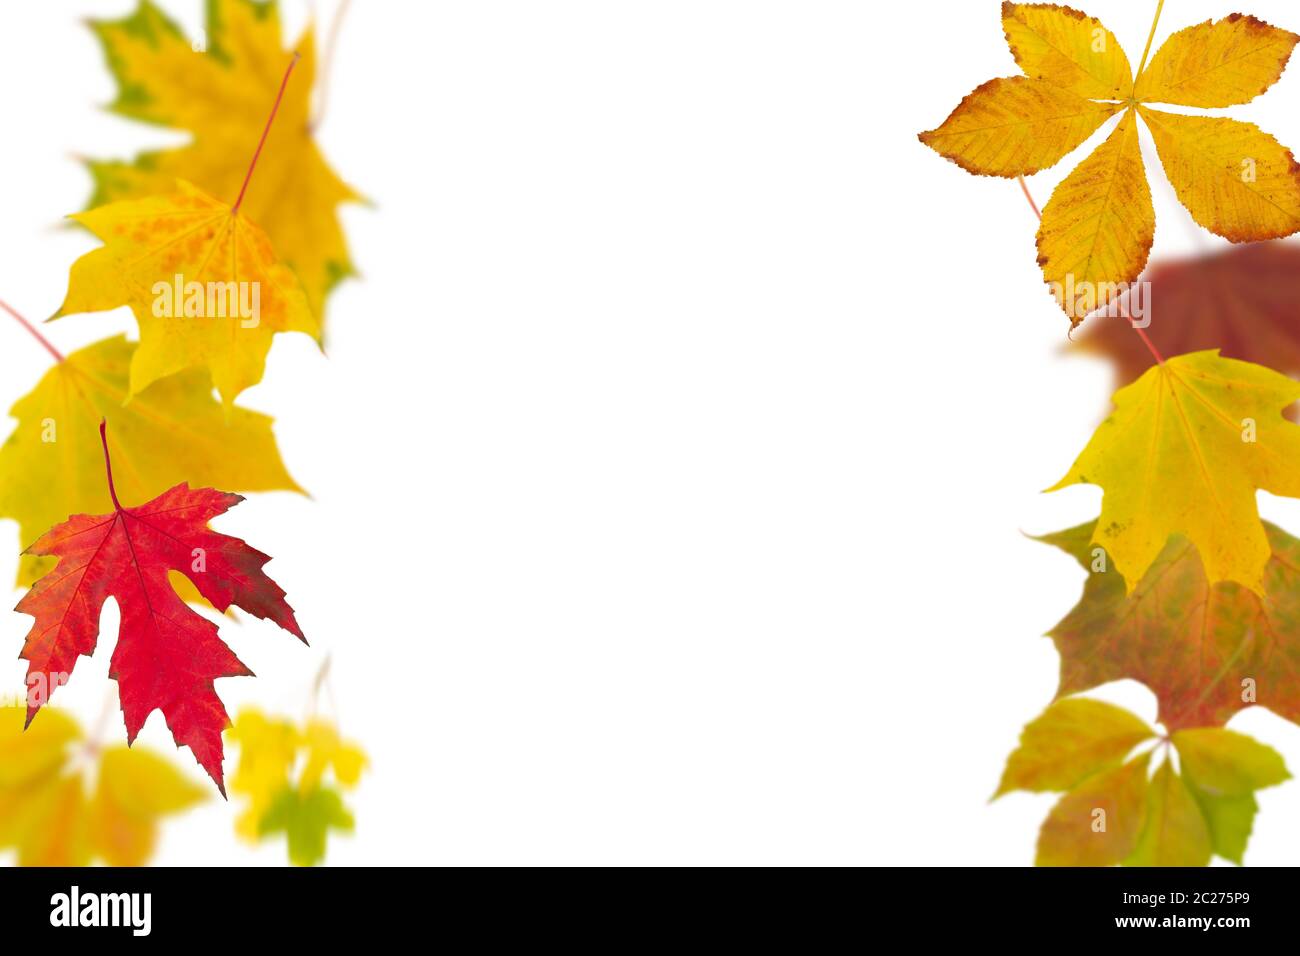 Natural autumn foliage isolated on white background. Seasonal decoration and design concept. Stock Photo